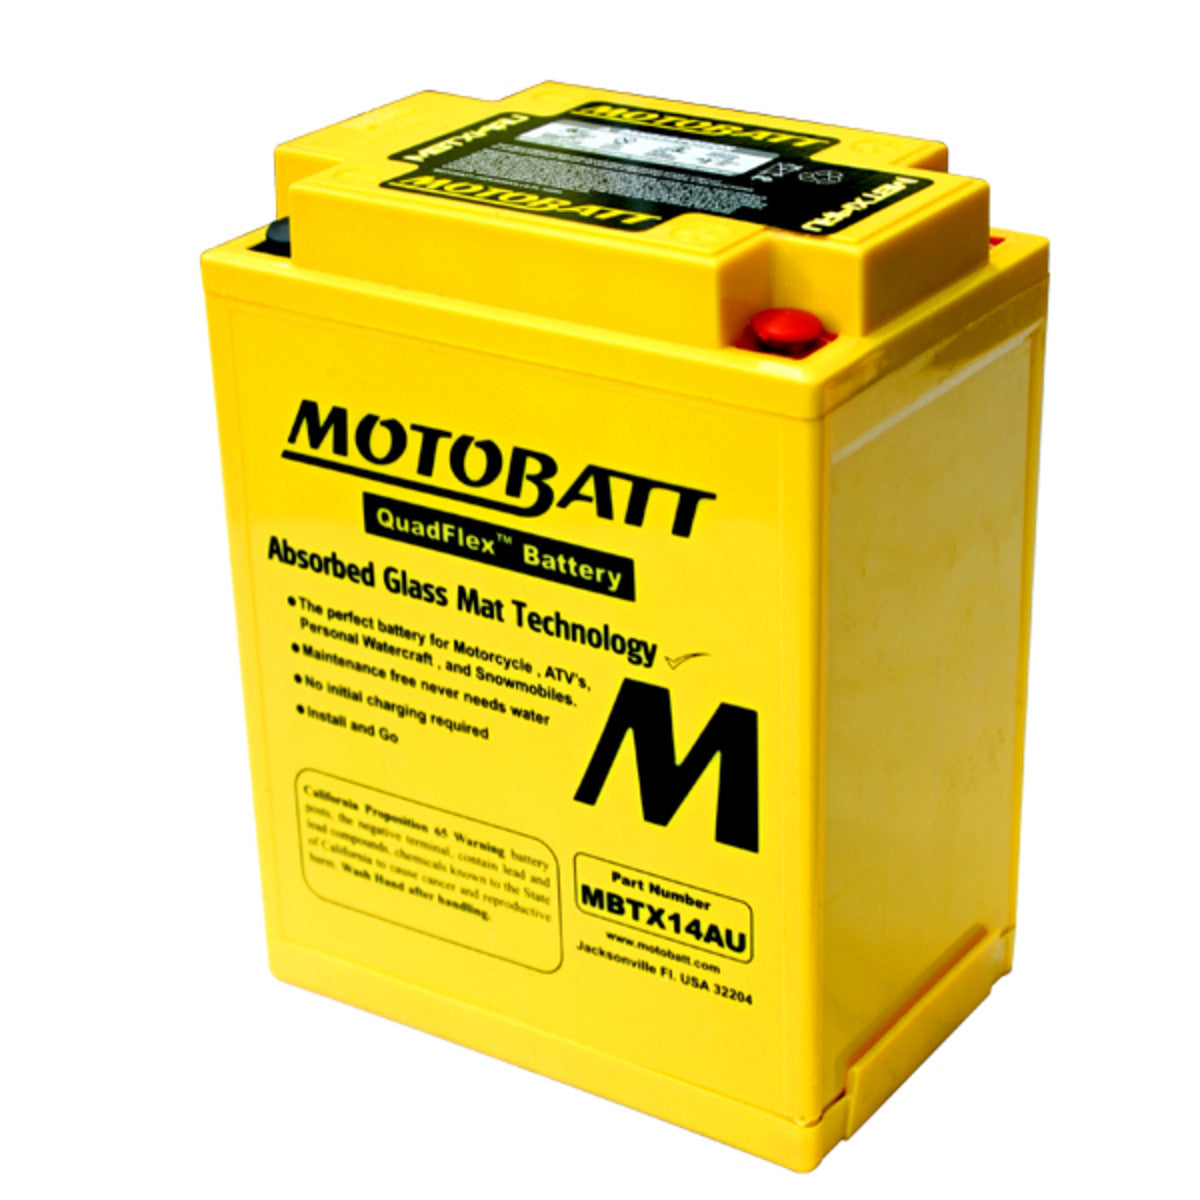 MBTX14AU Motobatt 12V AGM Battery